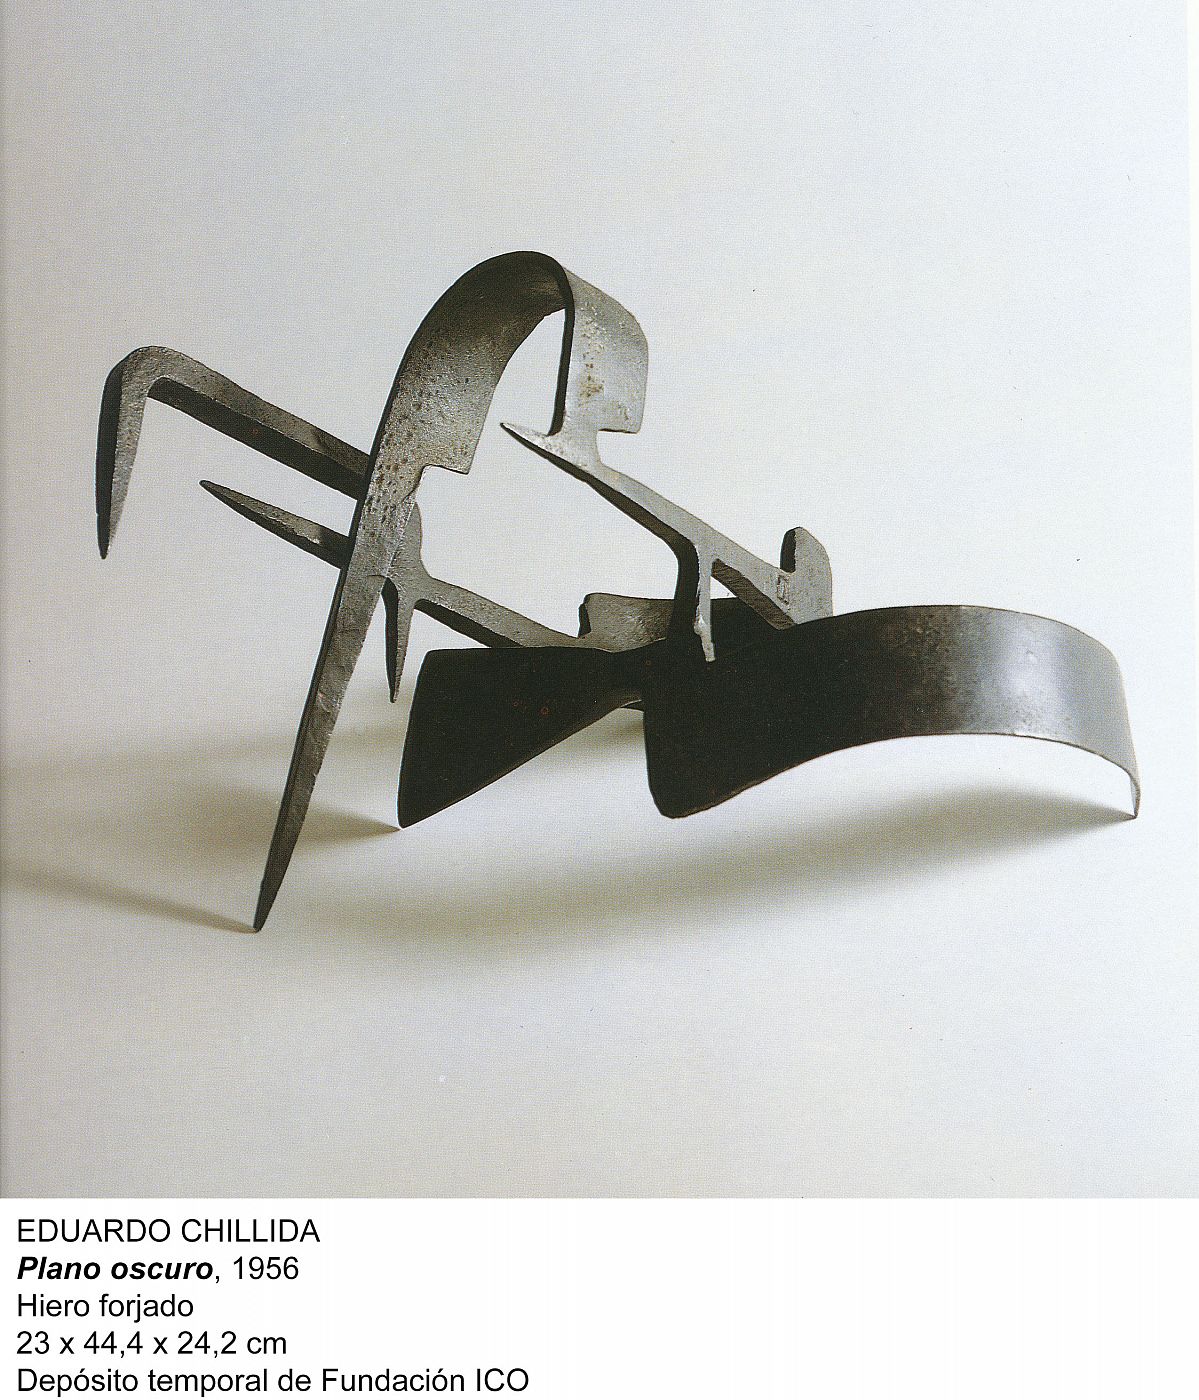 Eduardo CHILLIDA: Plano oscuro, 1956-Hierro forjado 23 x 44,4 x 24,2 cms